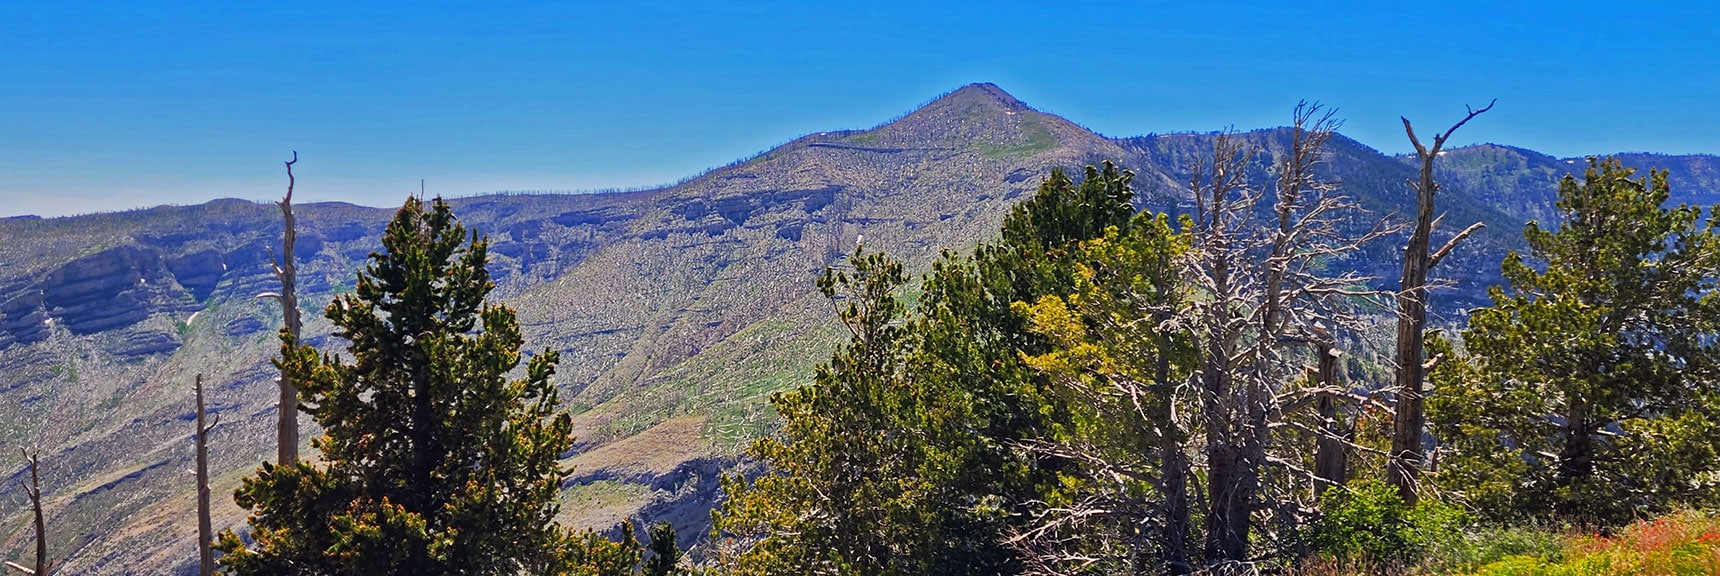 Griffith Peak from Harris Mt. Summit. | Fletcher Canyon to Harris Mountain Summit | Mt Charleston Wilderness, Nevada